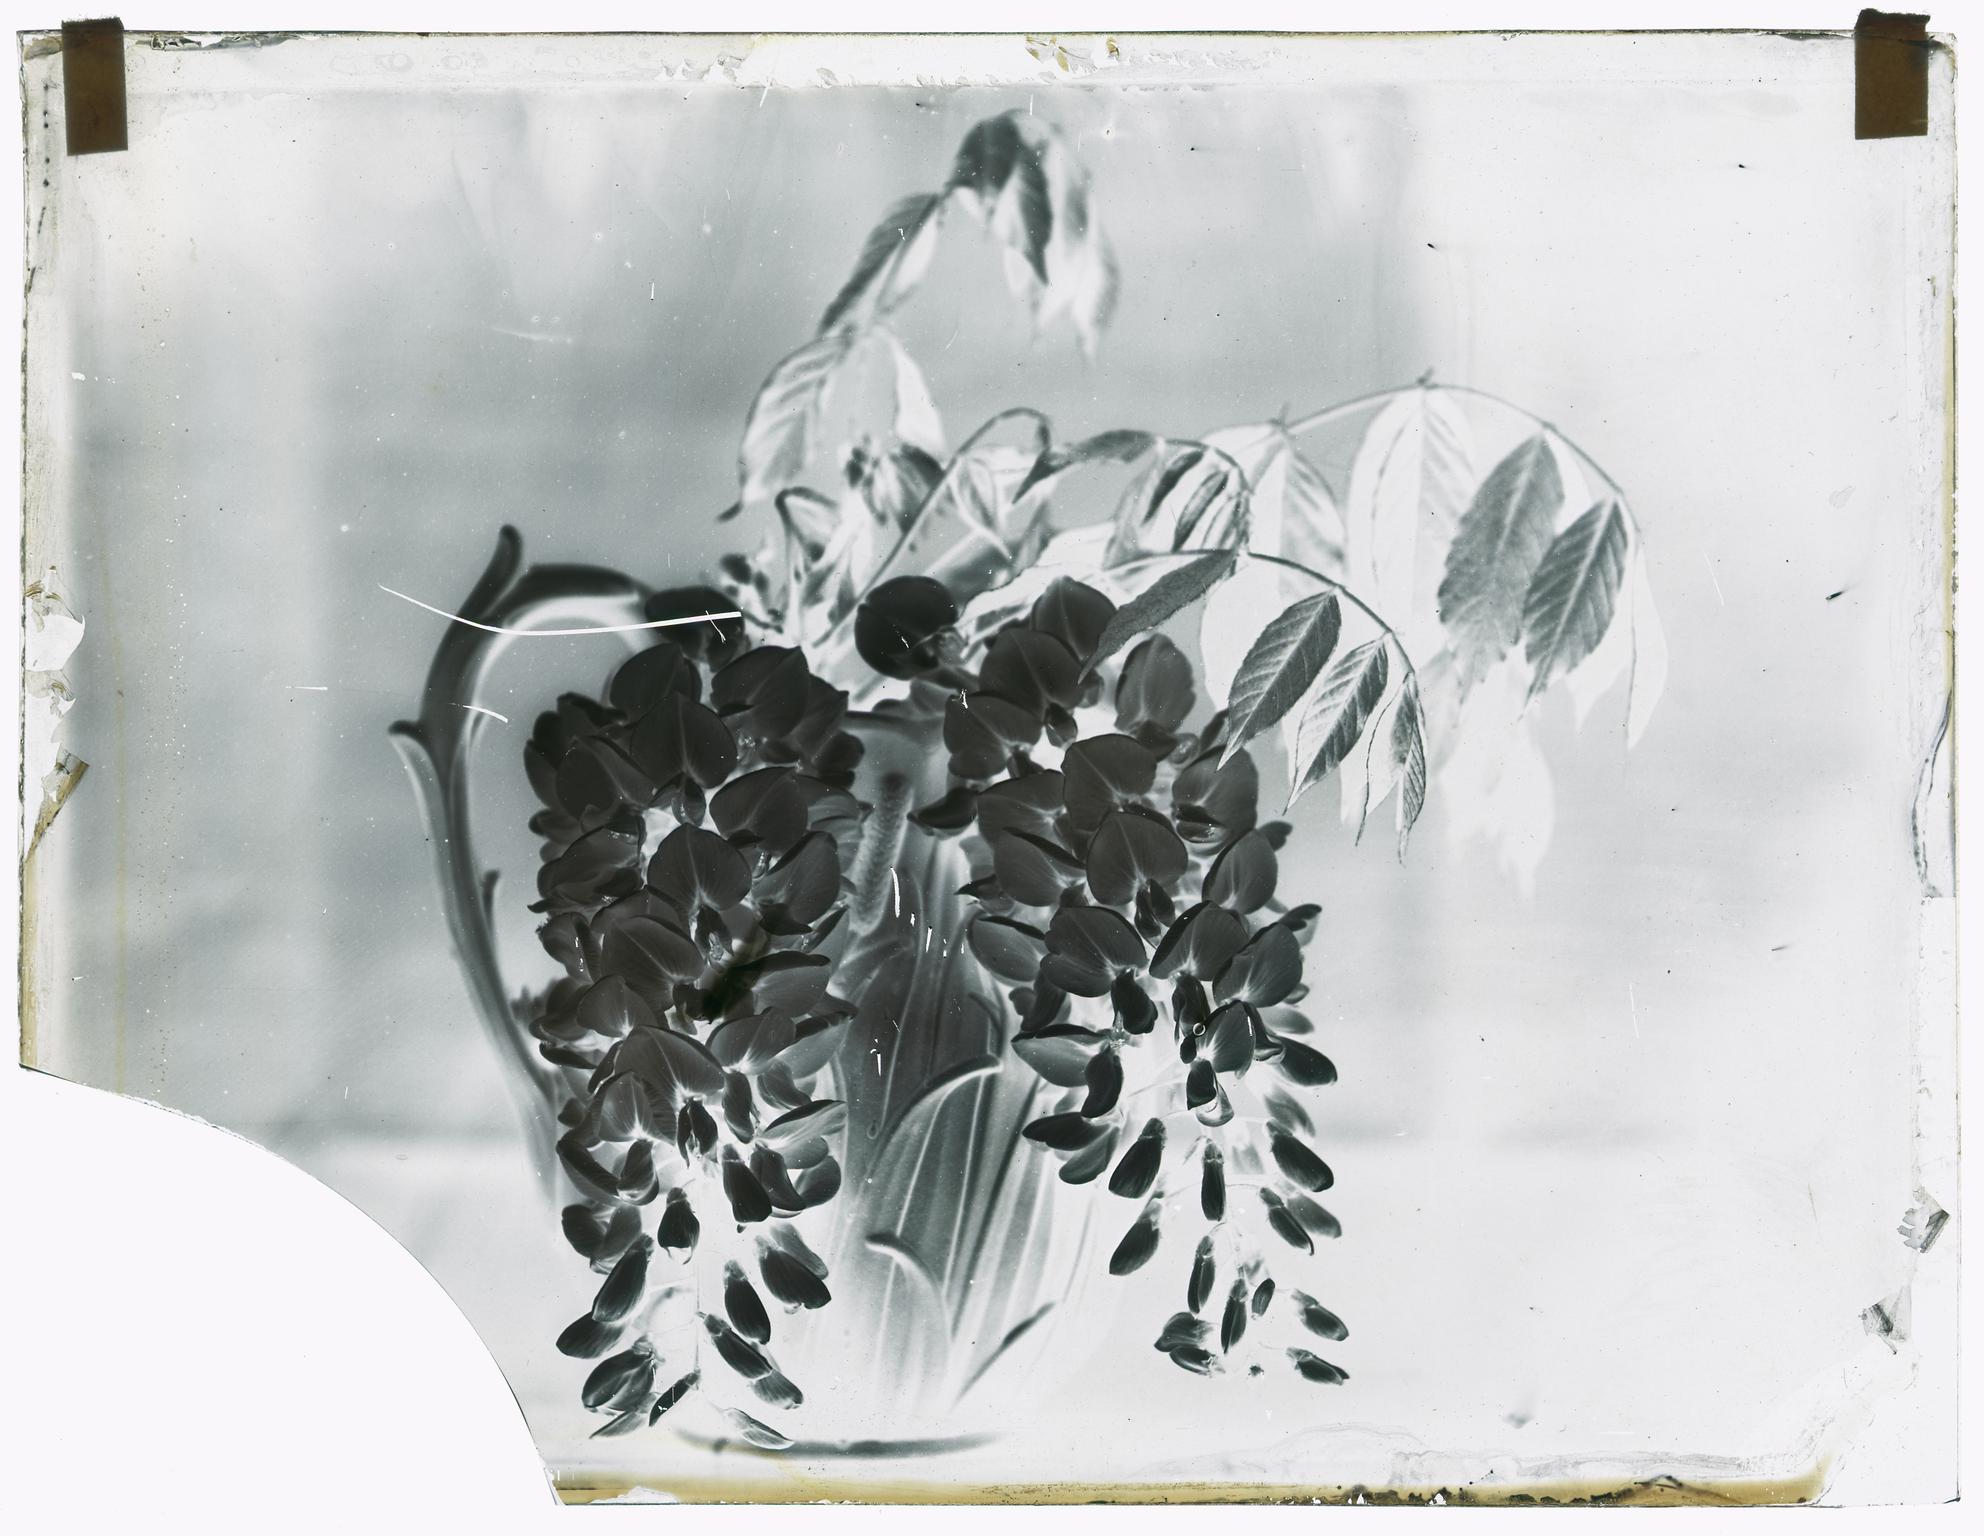 Vase of wisteria, glass negative